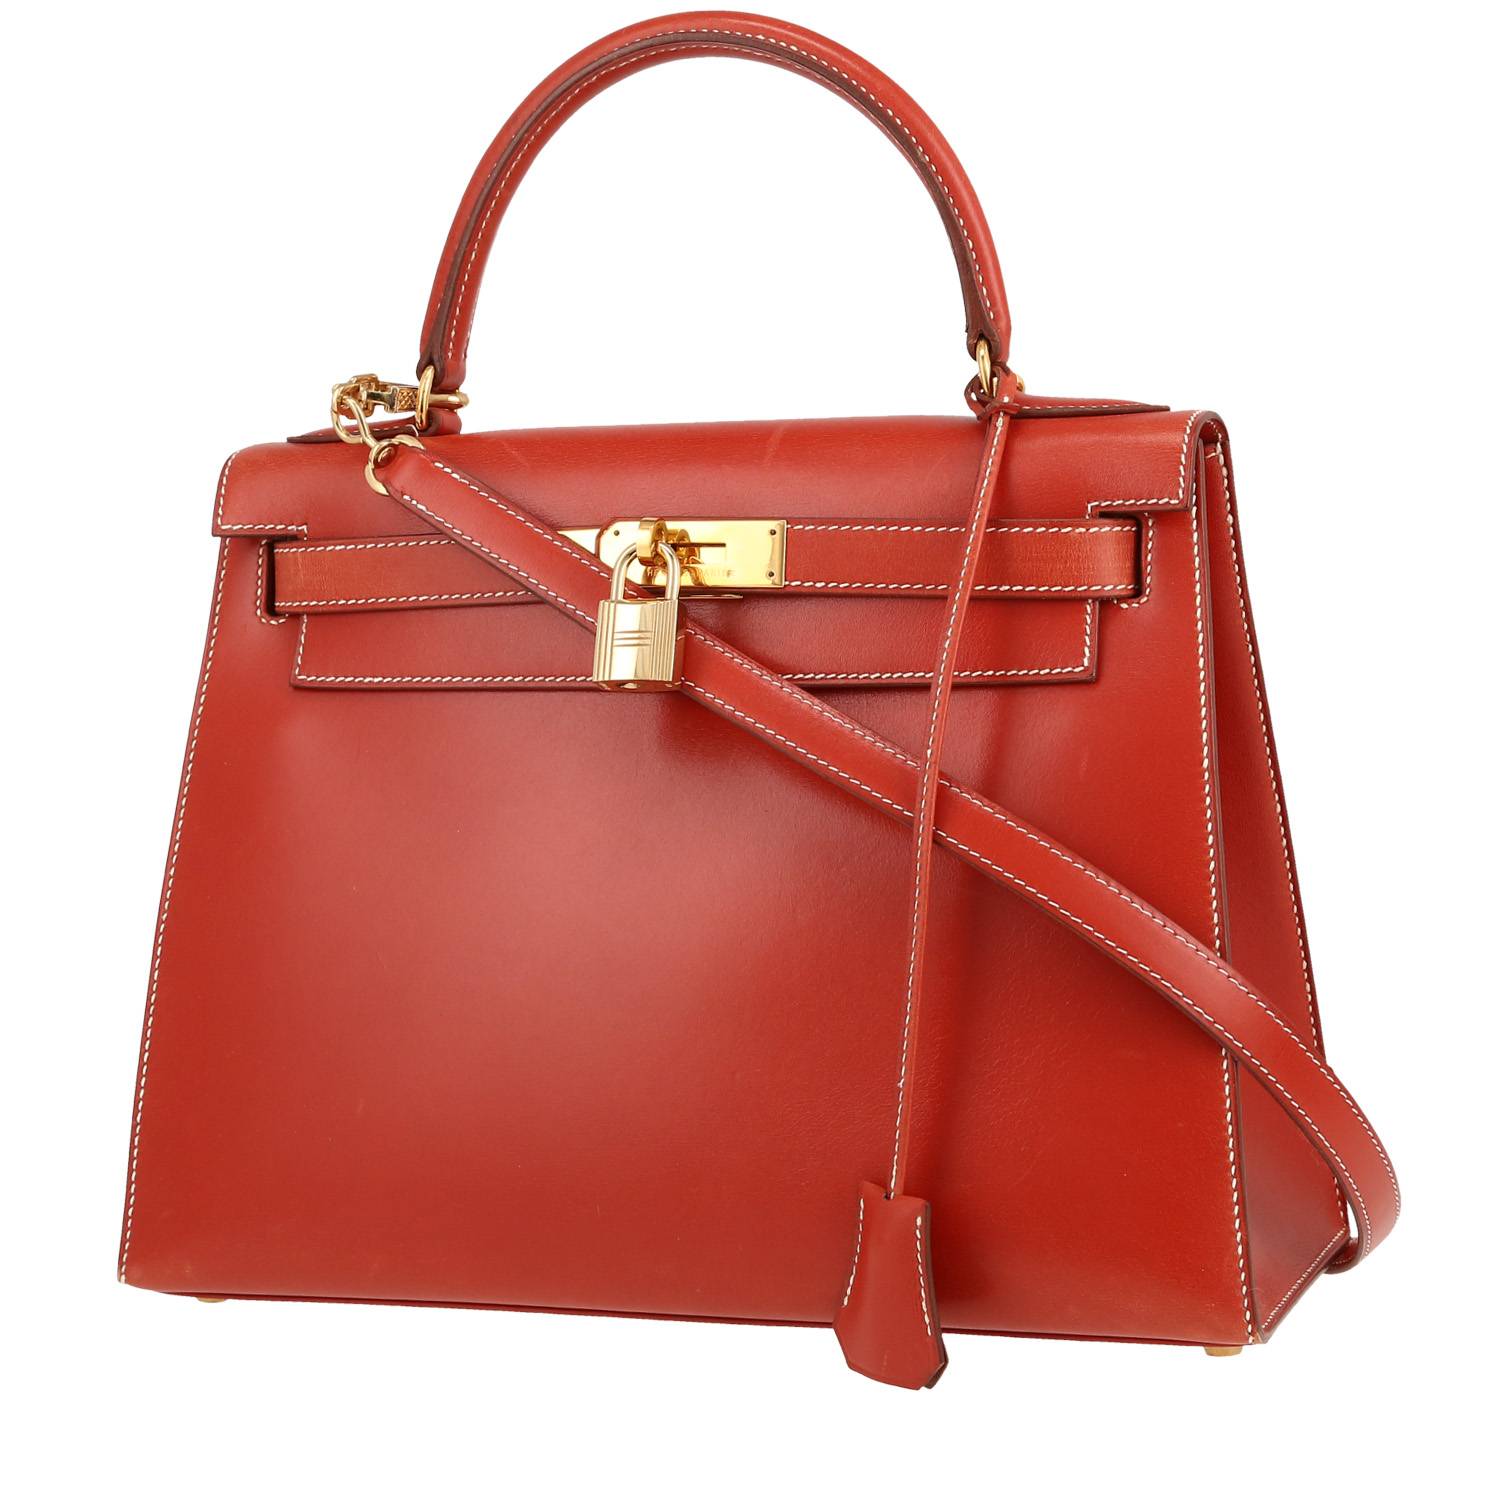 Hermès Kelly 28 cm handbag in brick red box leather - 00pp